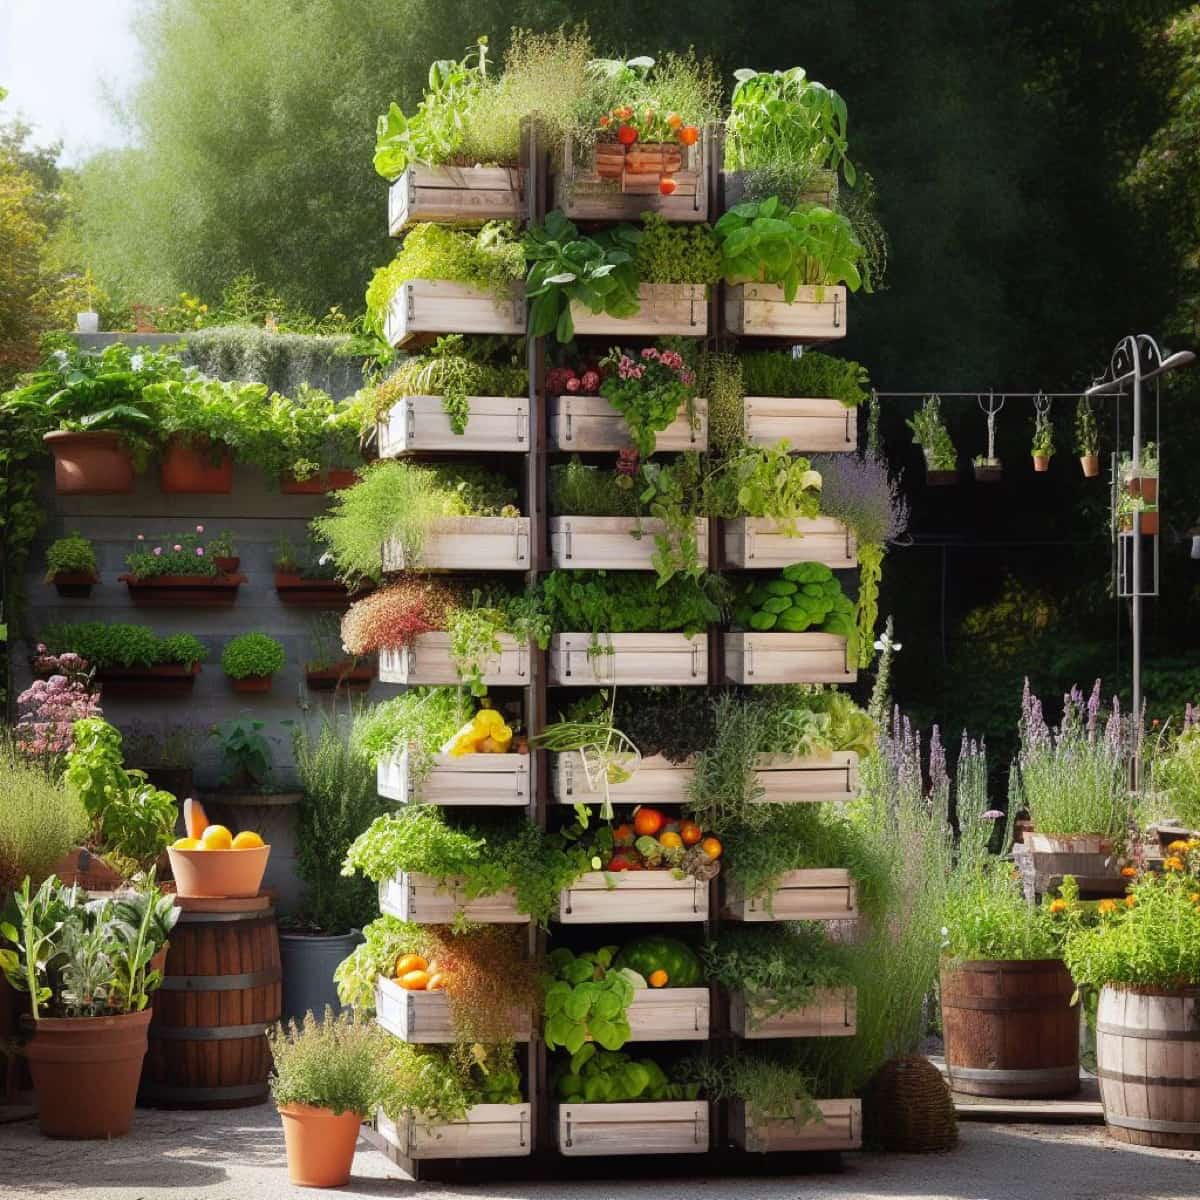 How to Make a Tower Garden